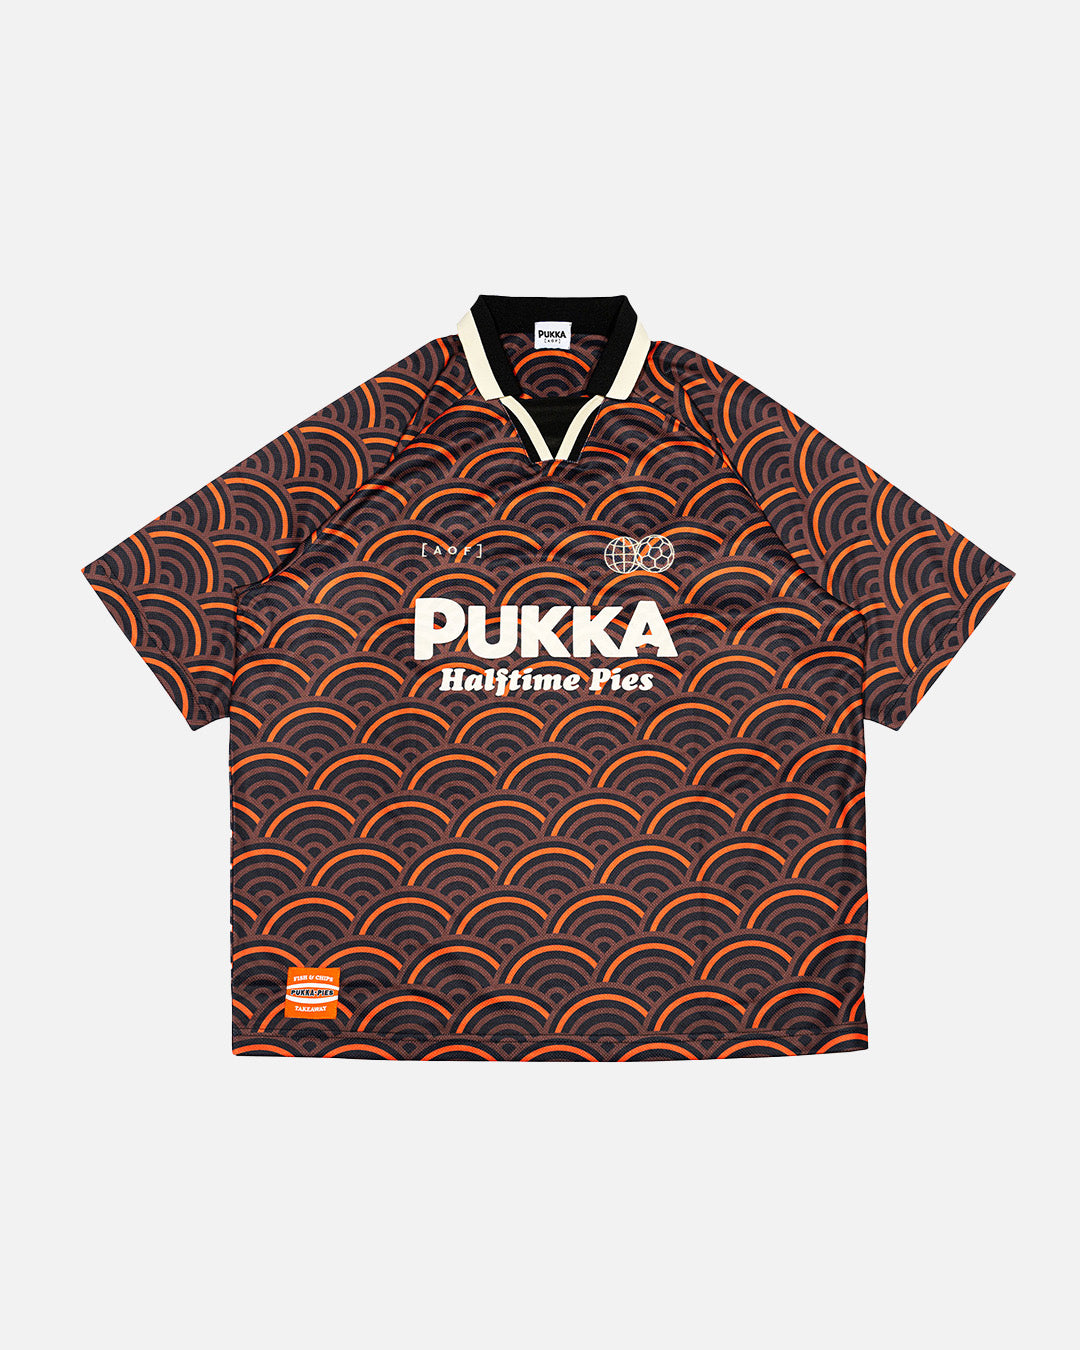 AOF x Pukka - Football Shirt